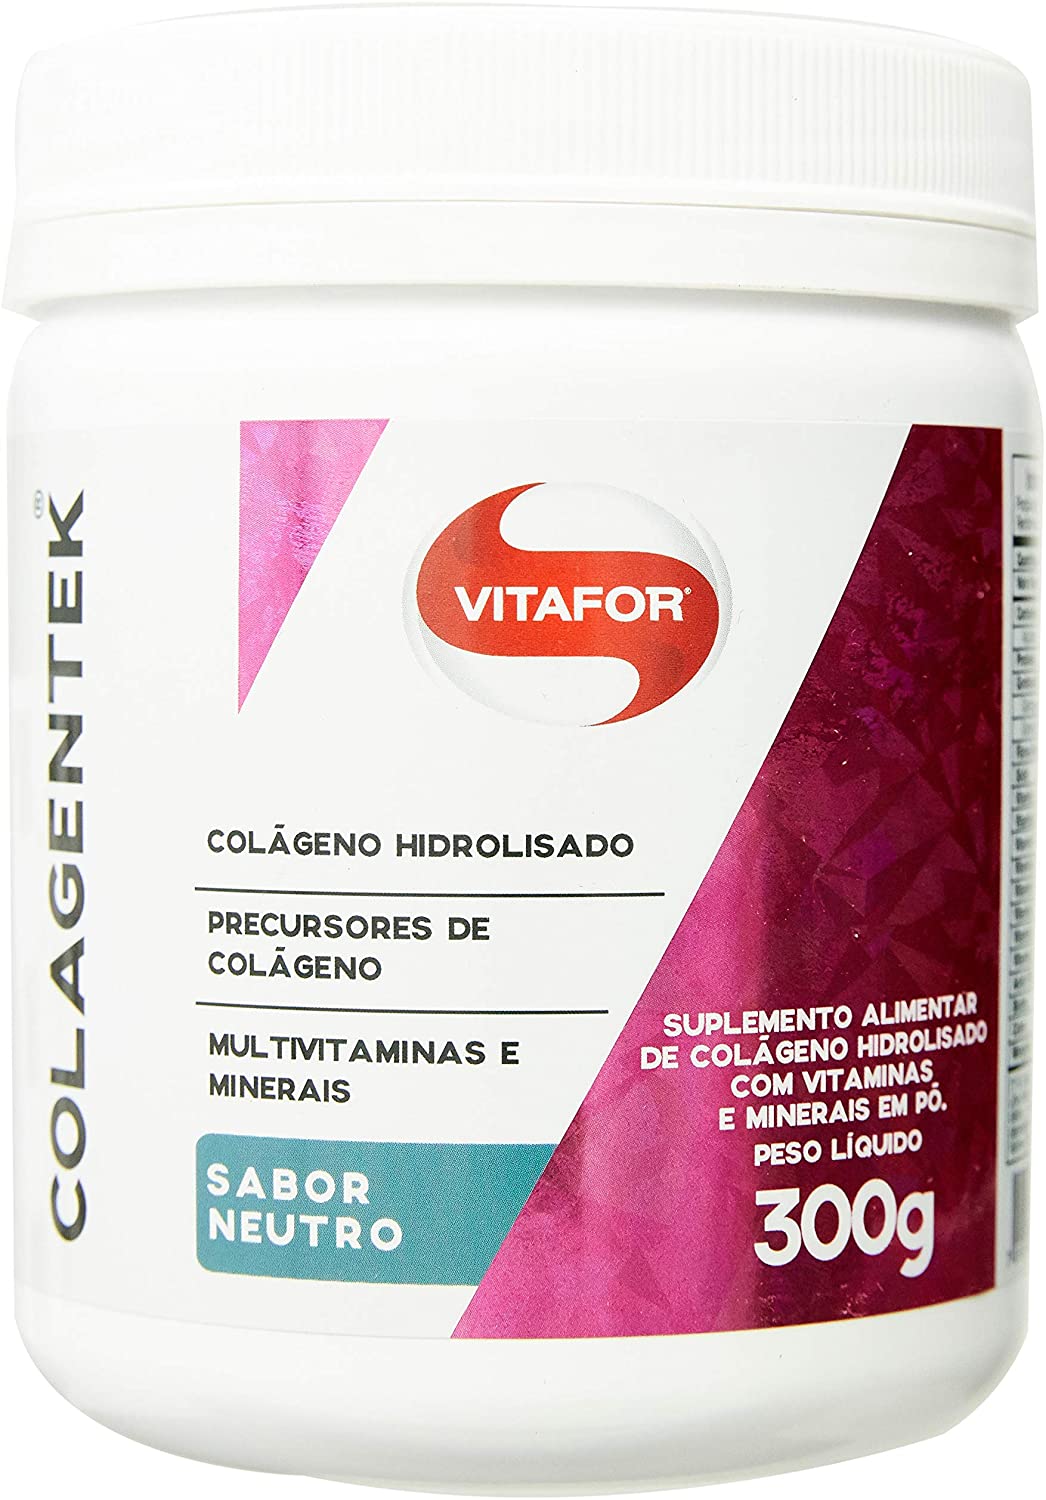 Colagentek - 300g Neutro, Vitafor